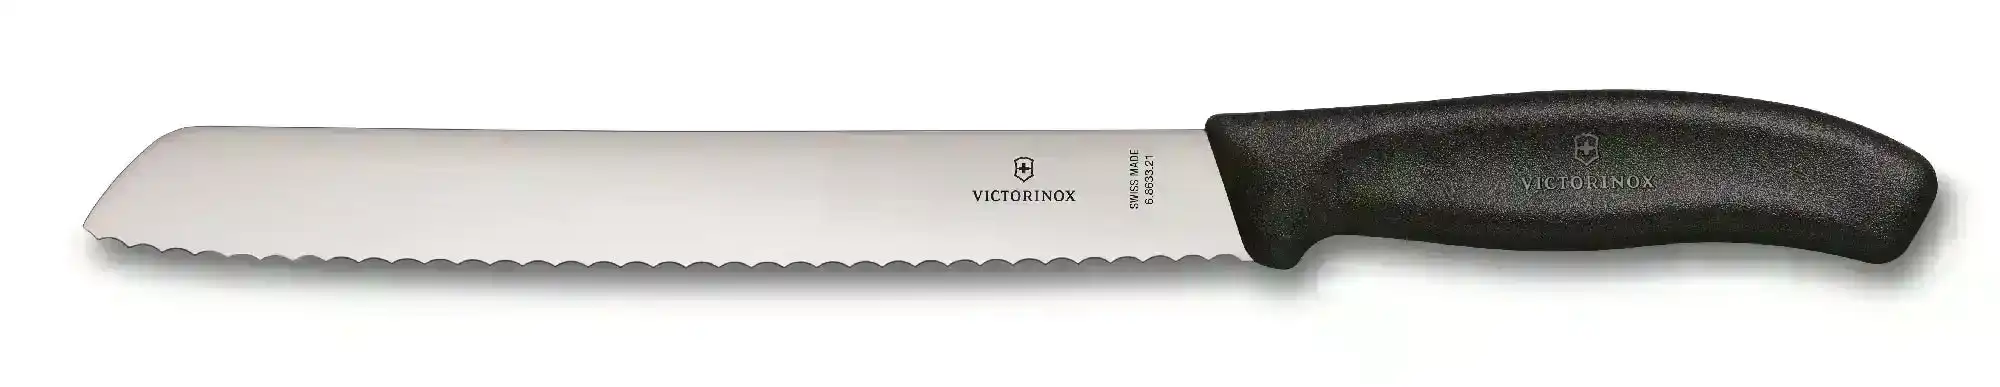 Victorinox Bread Knife 21cm - Black